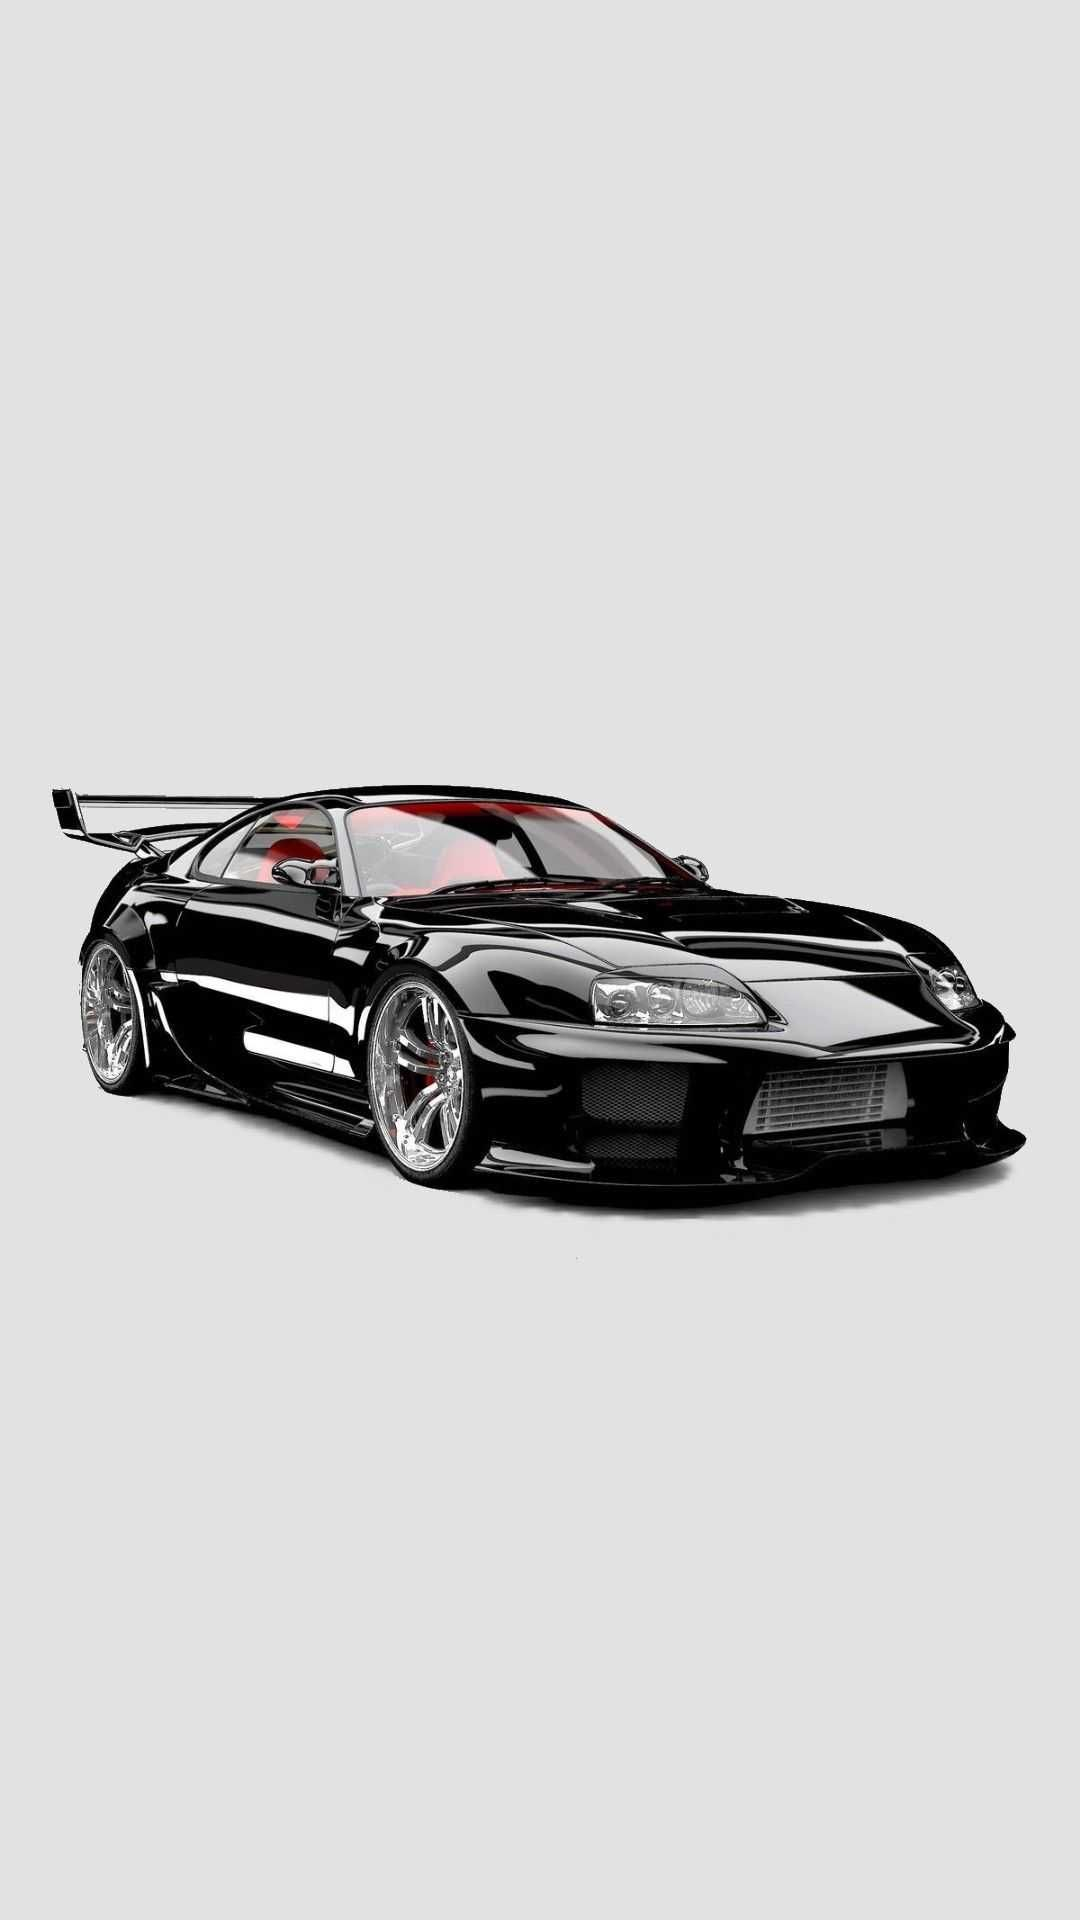 1080x1920 Toyota Supra Wallpaper | Toyota supra, Car cartoon, Street racing cars